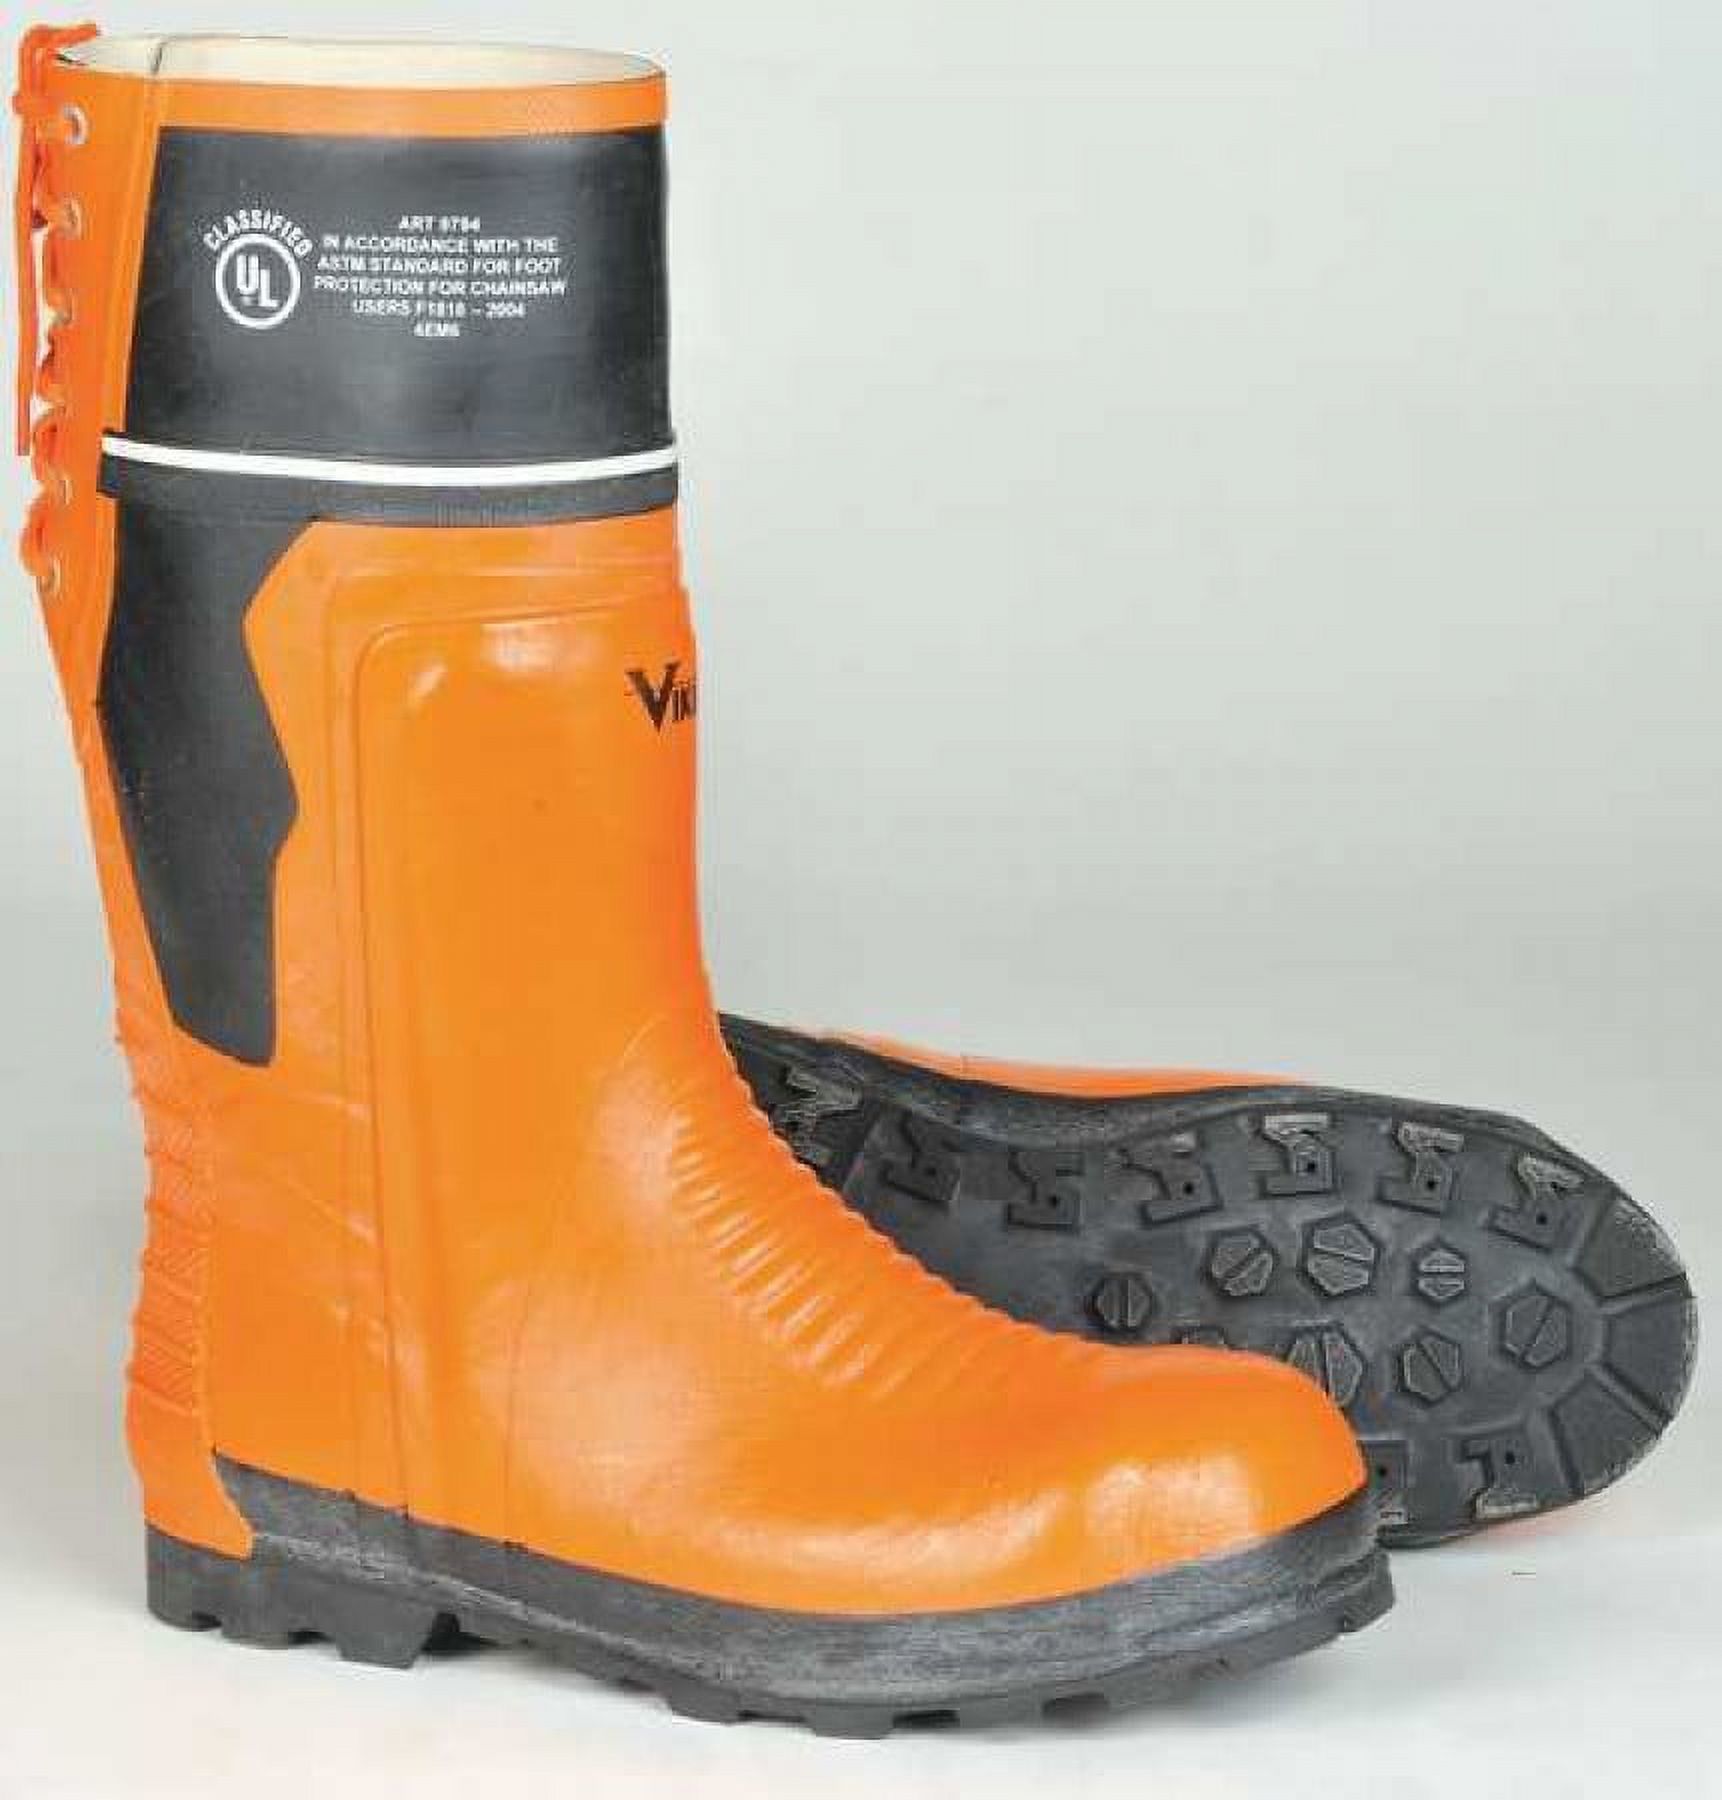 Viking Rubber Boot,Unisex,7,Knee,Orange,PR  VW64-1-7 - image 2 of 4